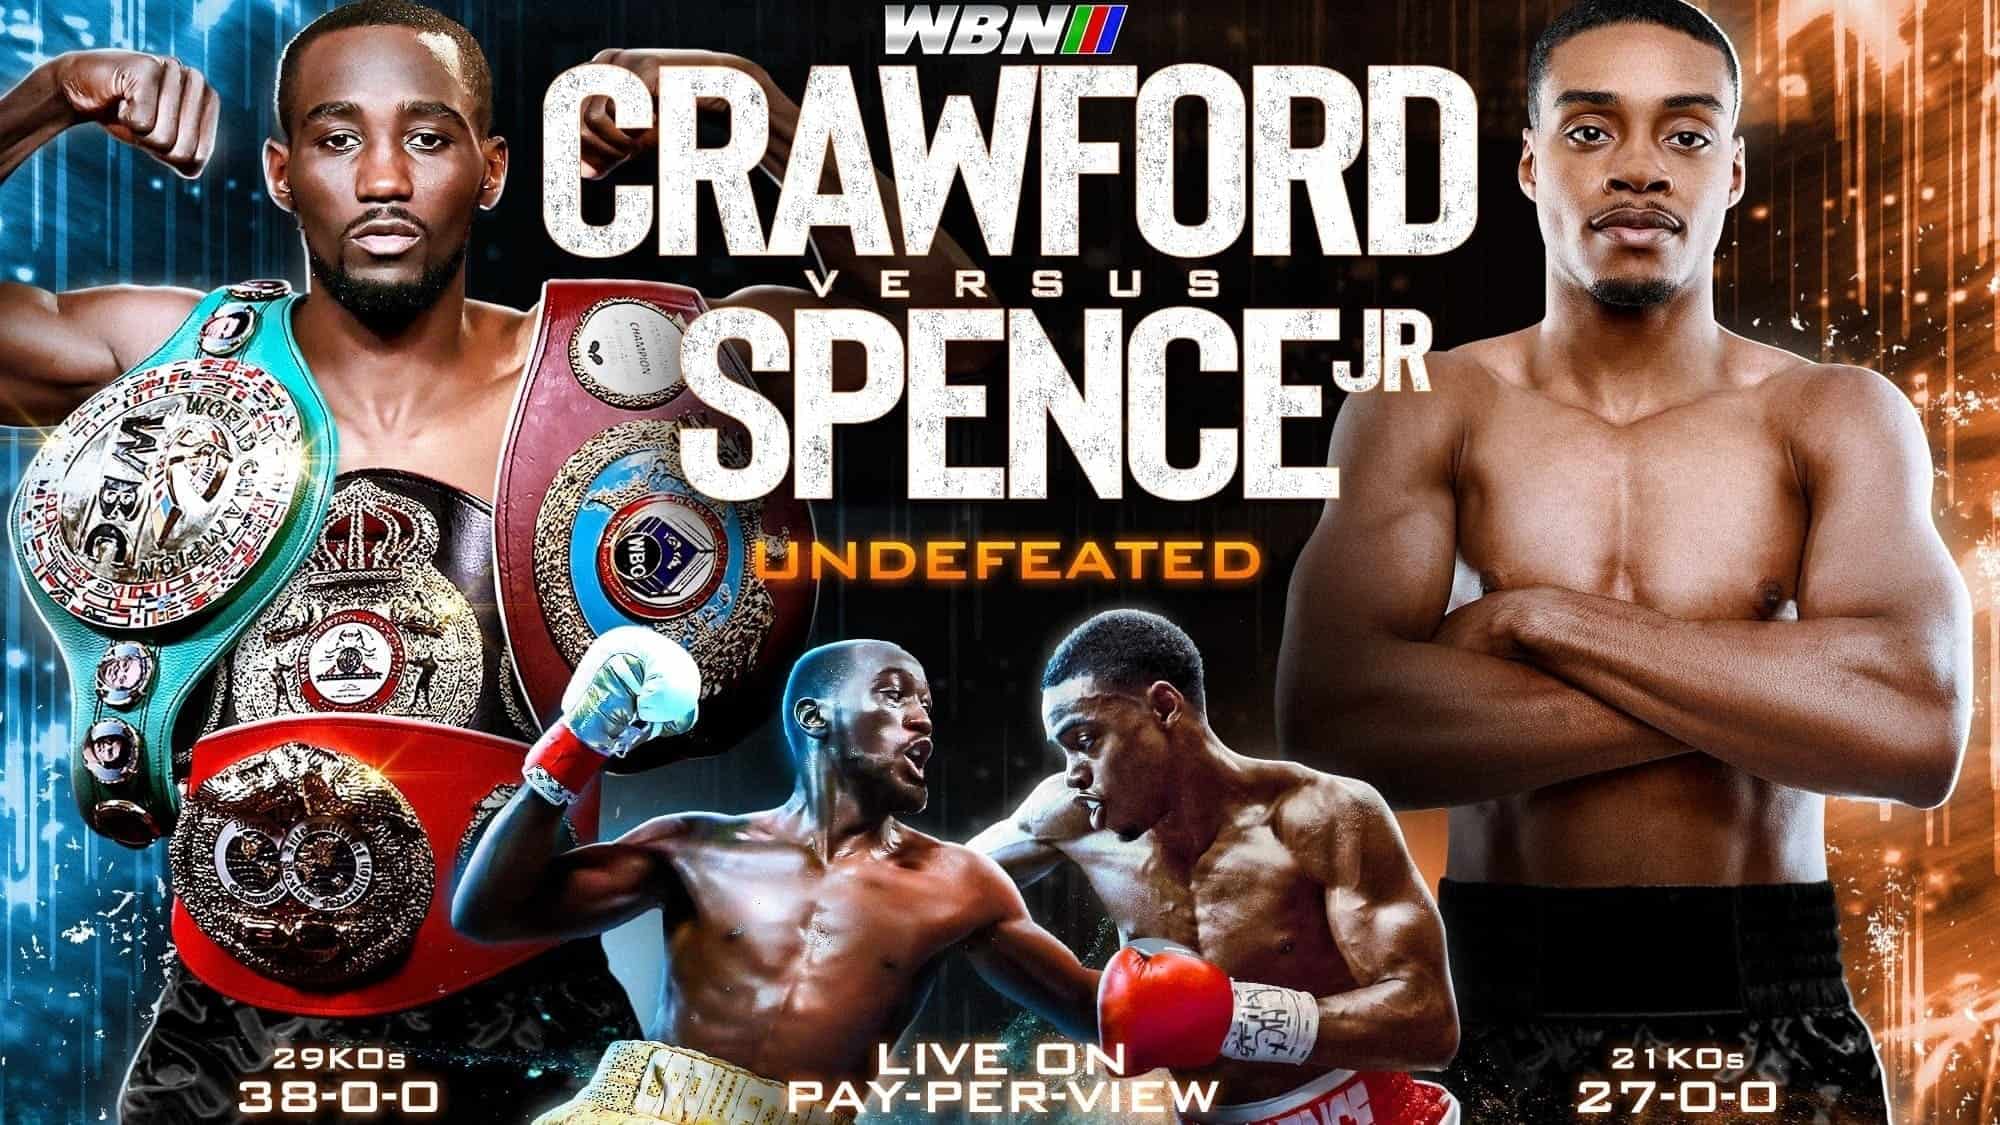 Spence vs Crawford close for undisputed Las Vegas showdown